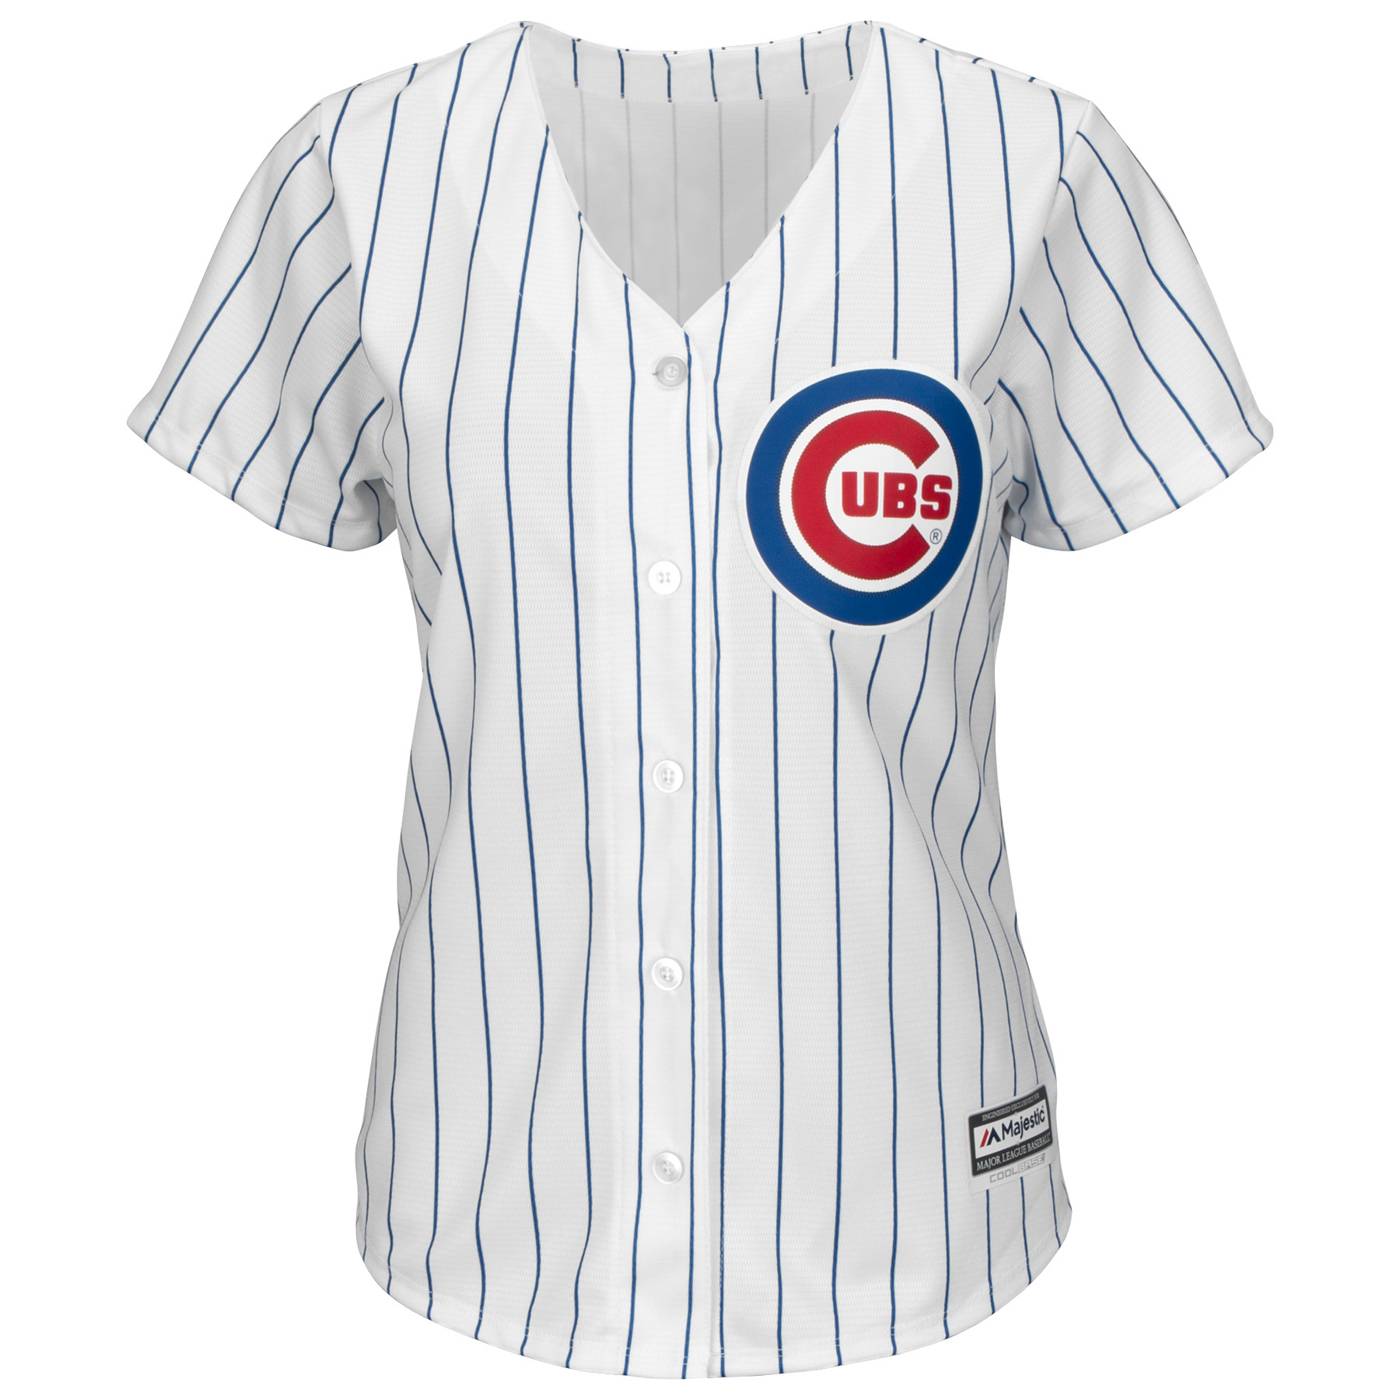 Chicago Cubs Merchandise For Sale Agbu Hye Geen - roblox shirt template stealer 2018 agbu hye geen